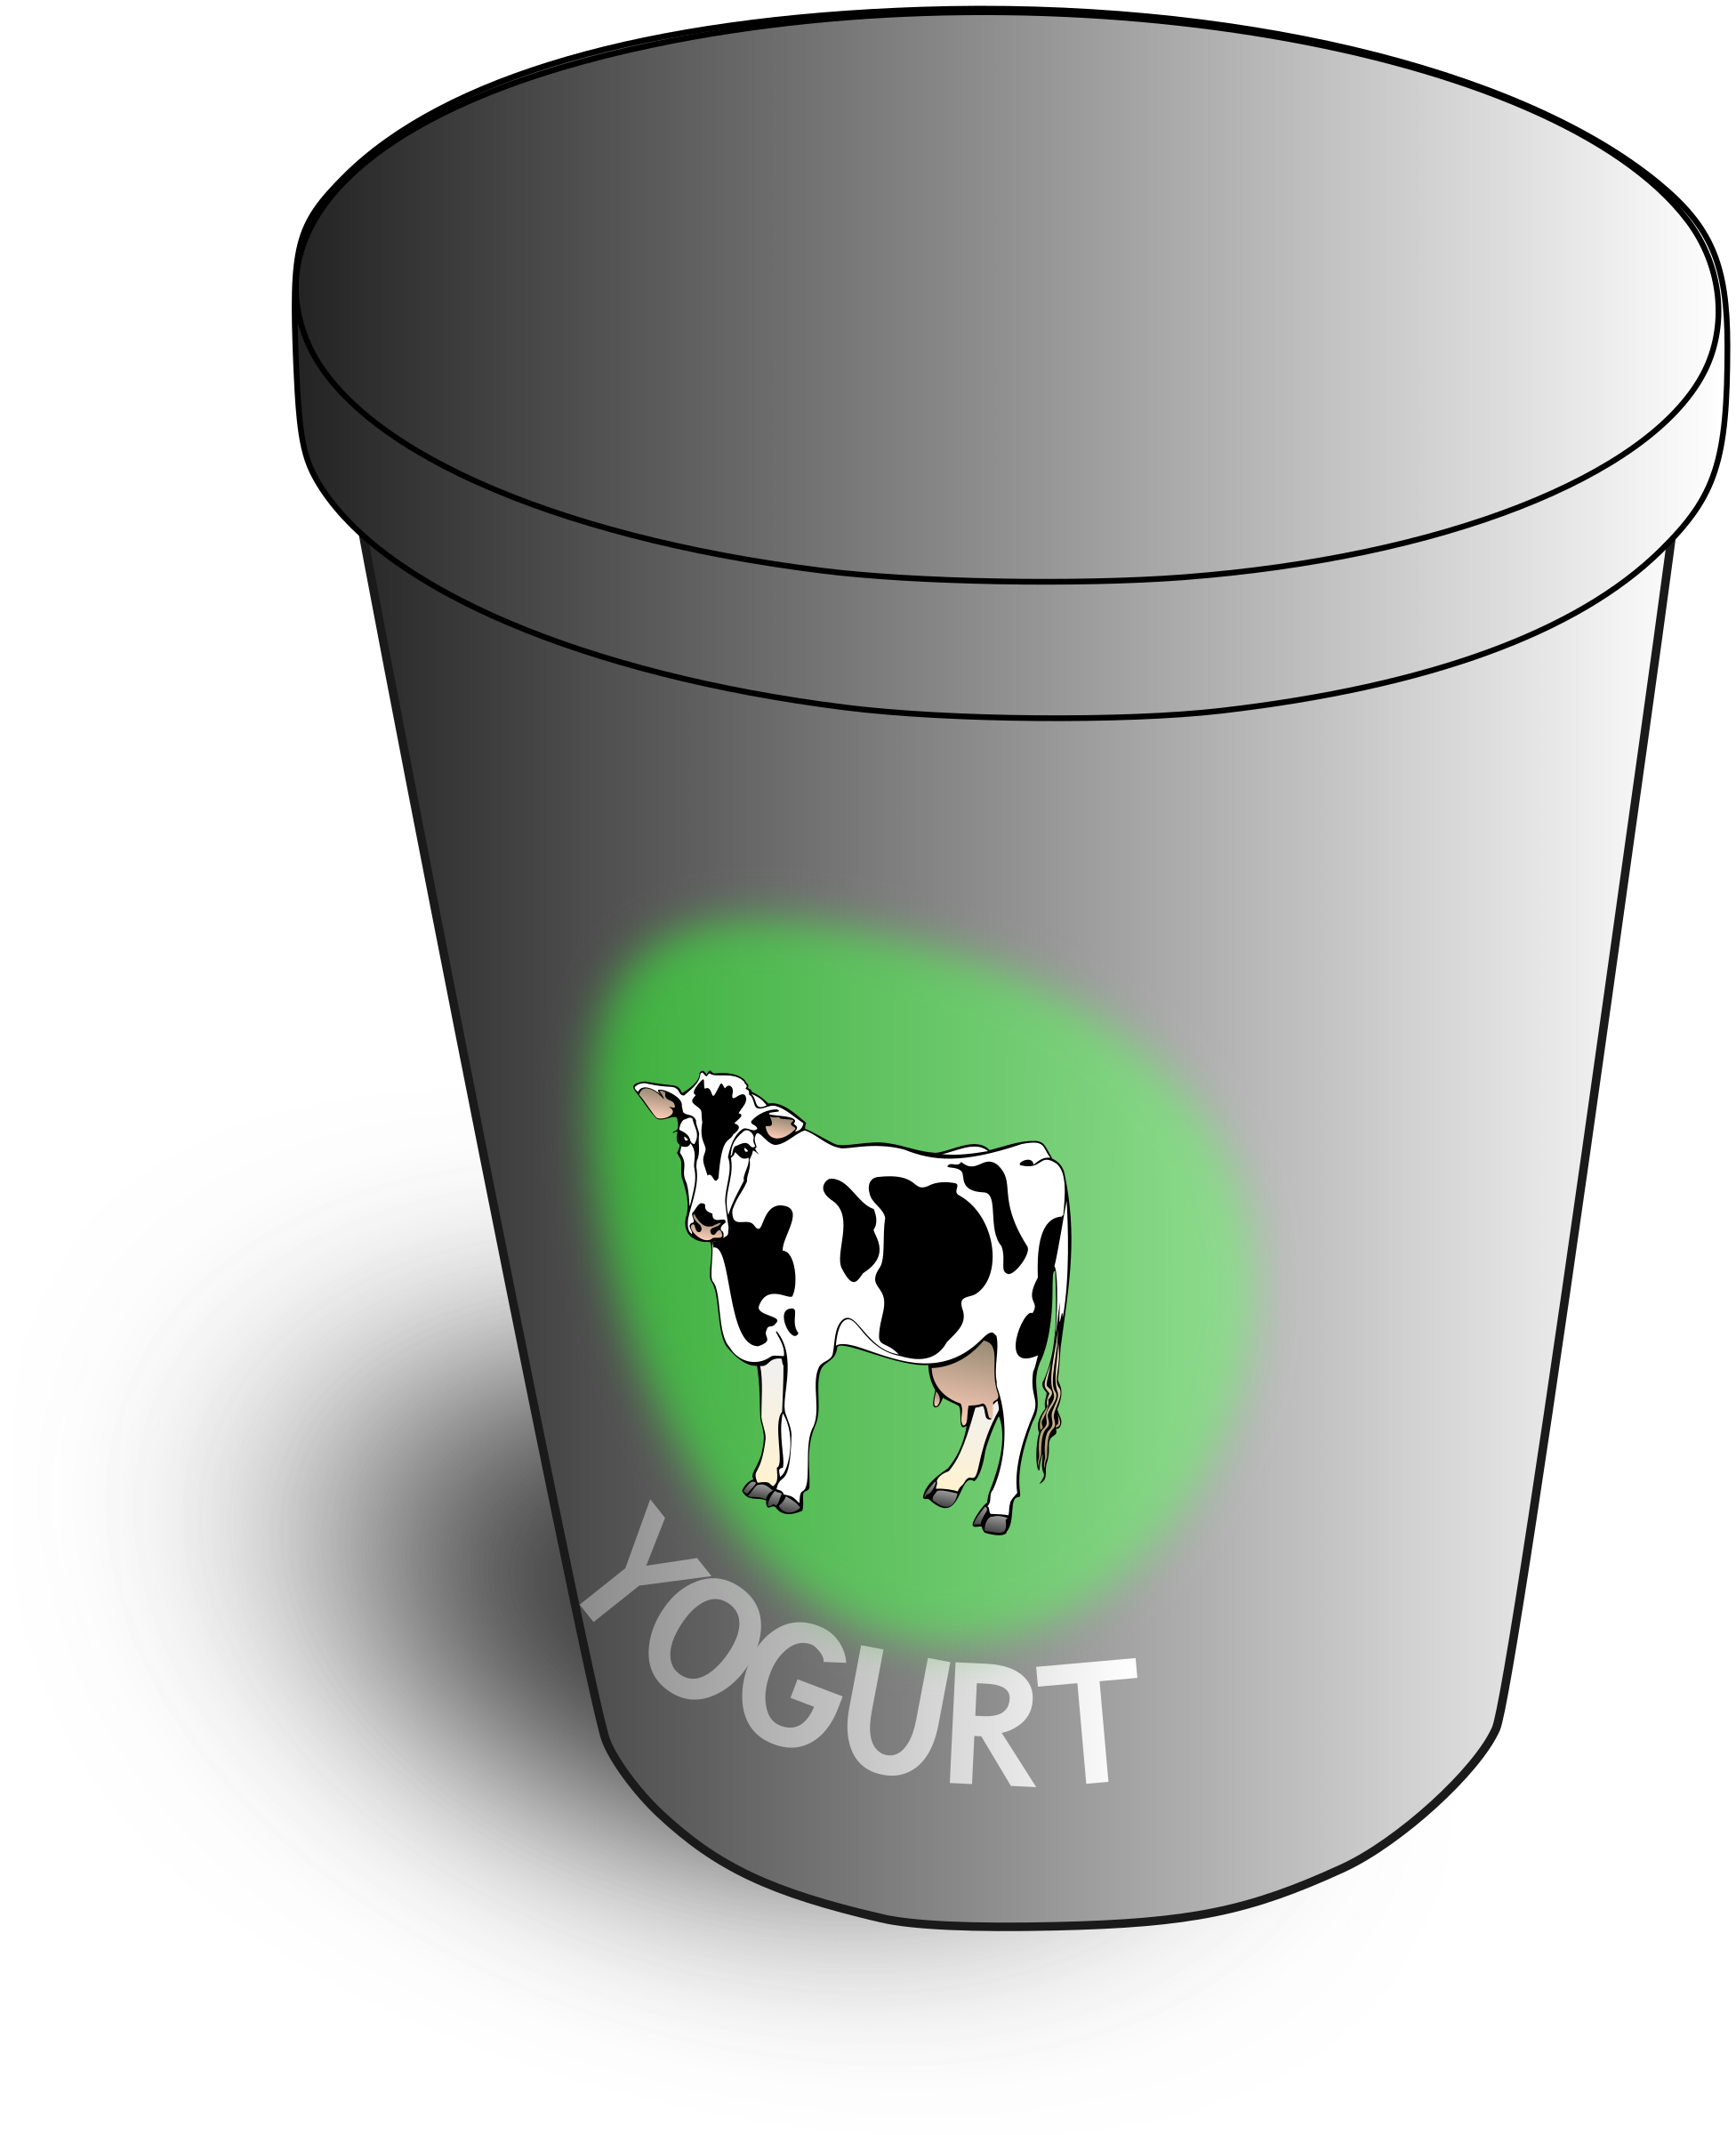 yogurt cup clipart - photo #41